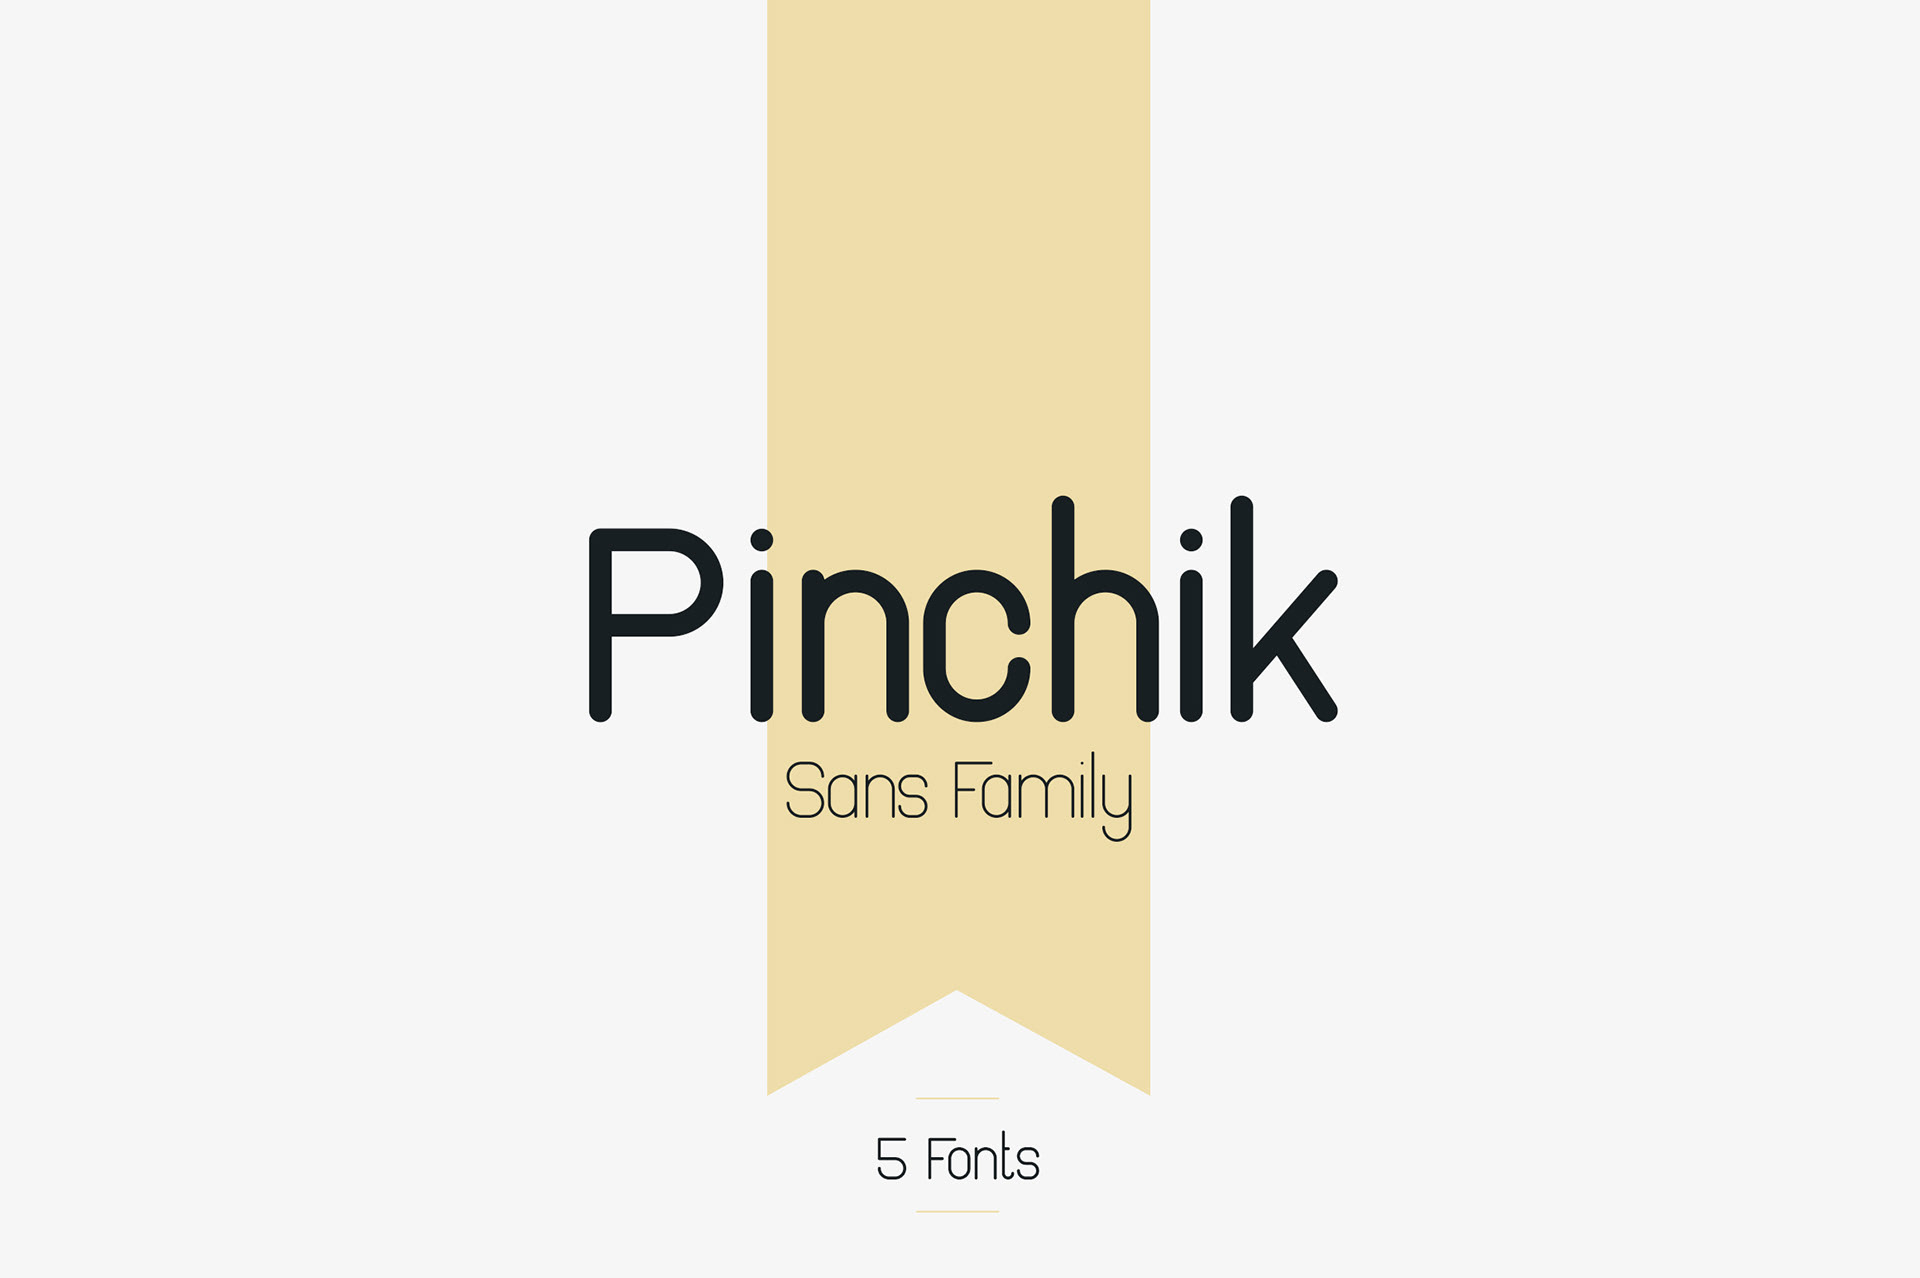 Pinchik Sans Family - sans-serif